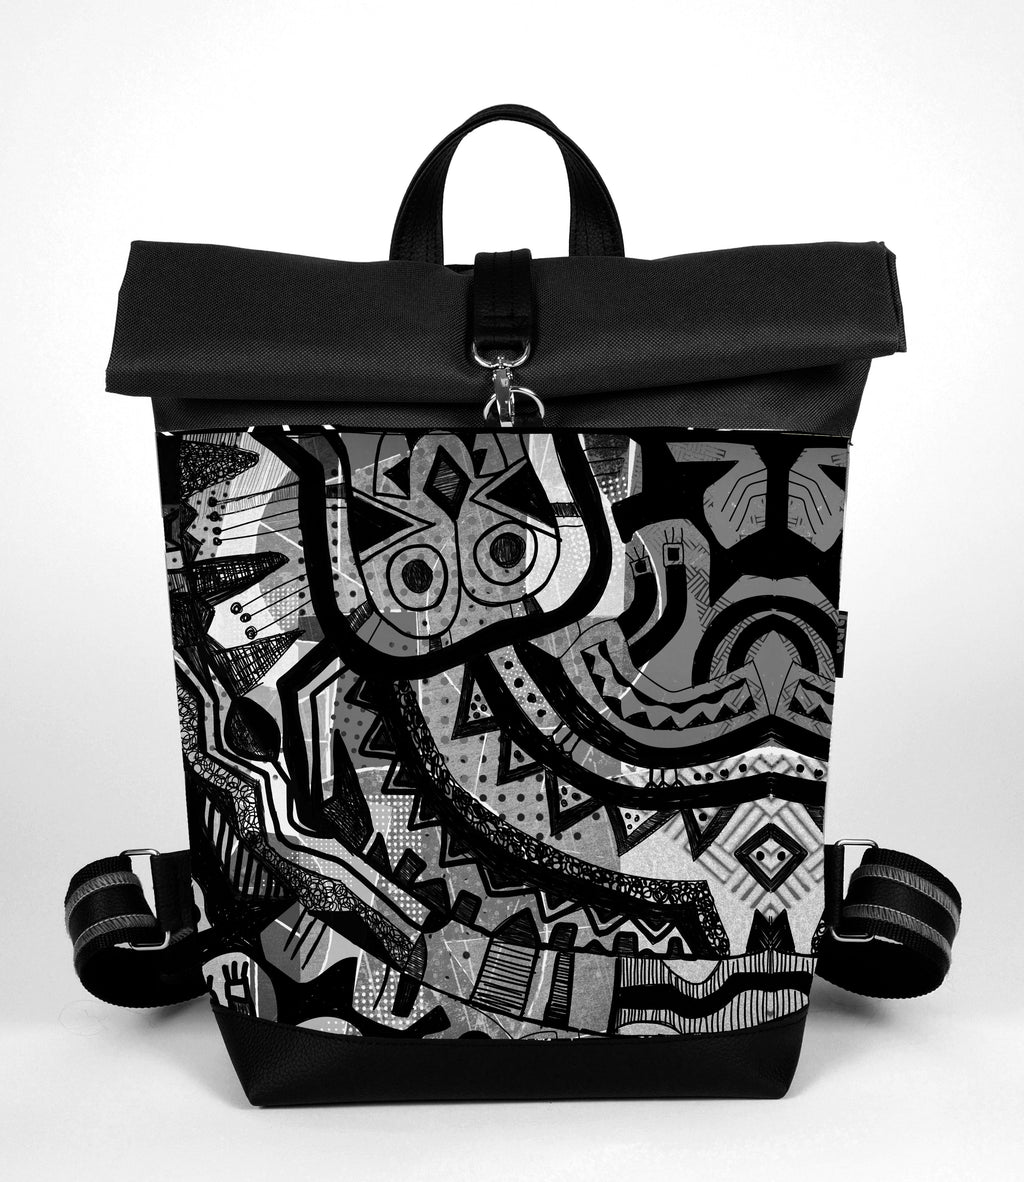 Bardo roll backpack - Dragon - Premium Bardo backpack from BARDO ART WORKS - Just lvabstract, art, backpack, black, dragon, gift, handemade, roll, tablet, urban style, vegan leather85.00! Shop now at BARDO ART WORKS